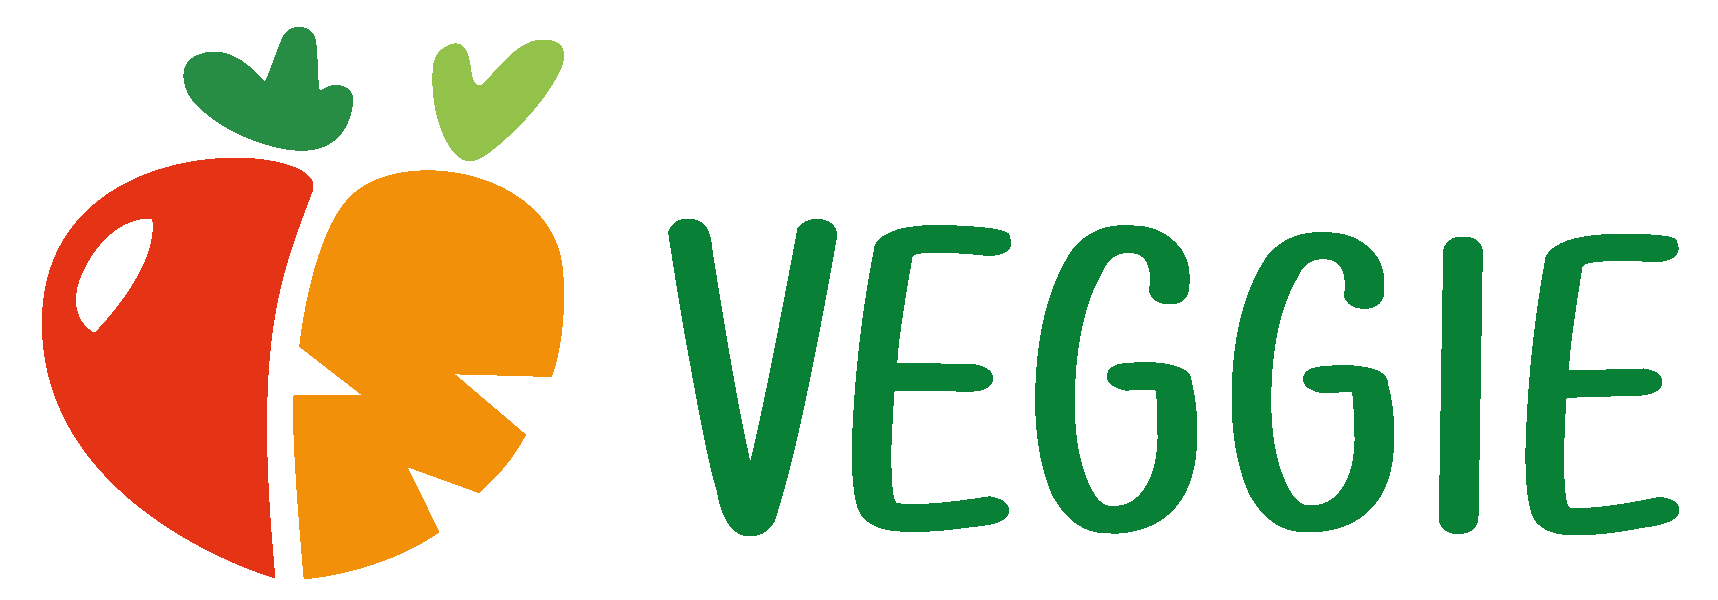 veggie_logo_2018_1718x300